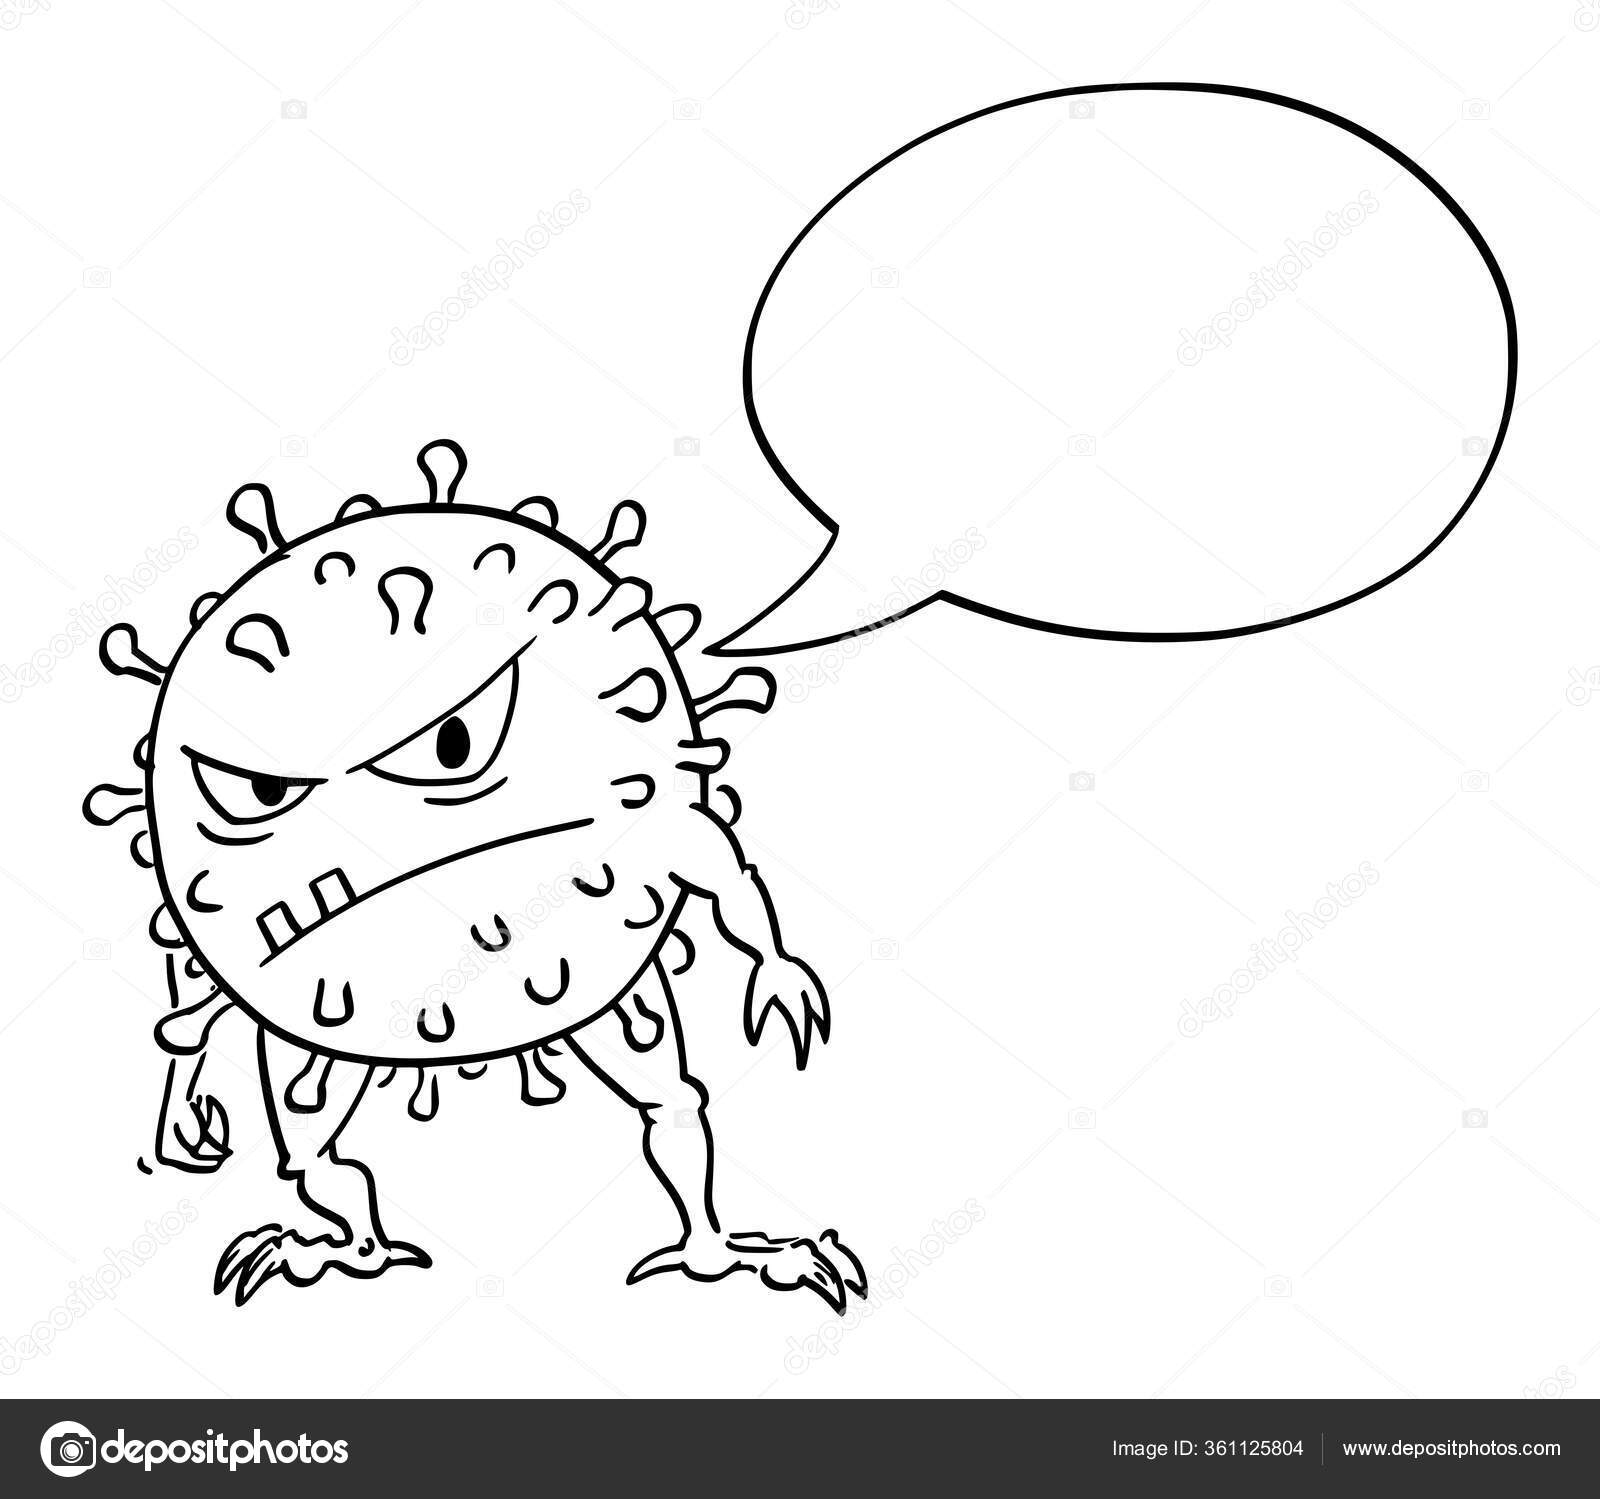 Vector Funny Cartoon Illustration Of Crazy Coronavirus Covid 19 Virus Monster With Empty Speech Bubble Saying Something Stock Vector C Ursus Zdeneksasek Com 361125804